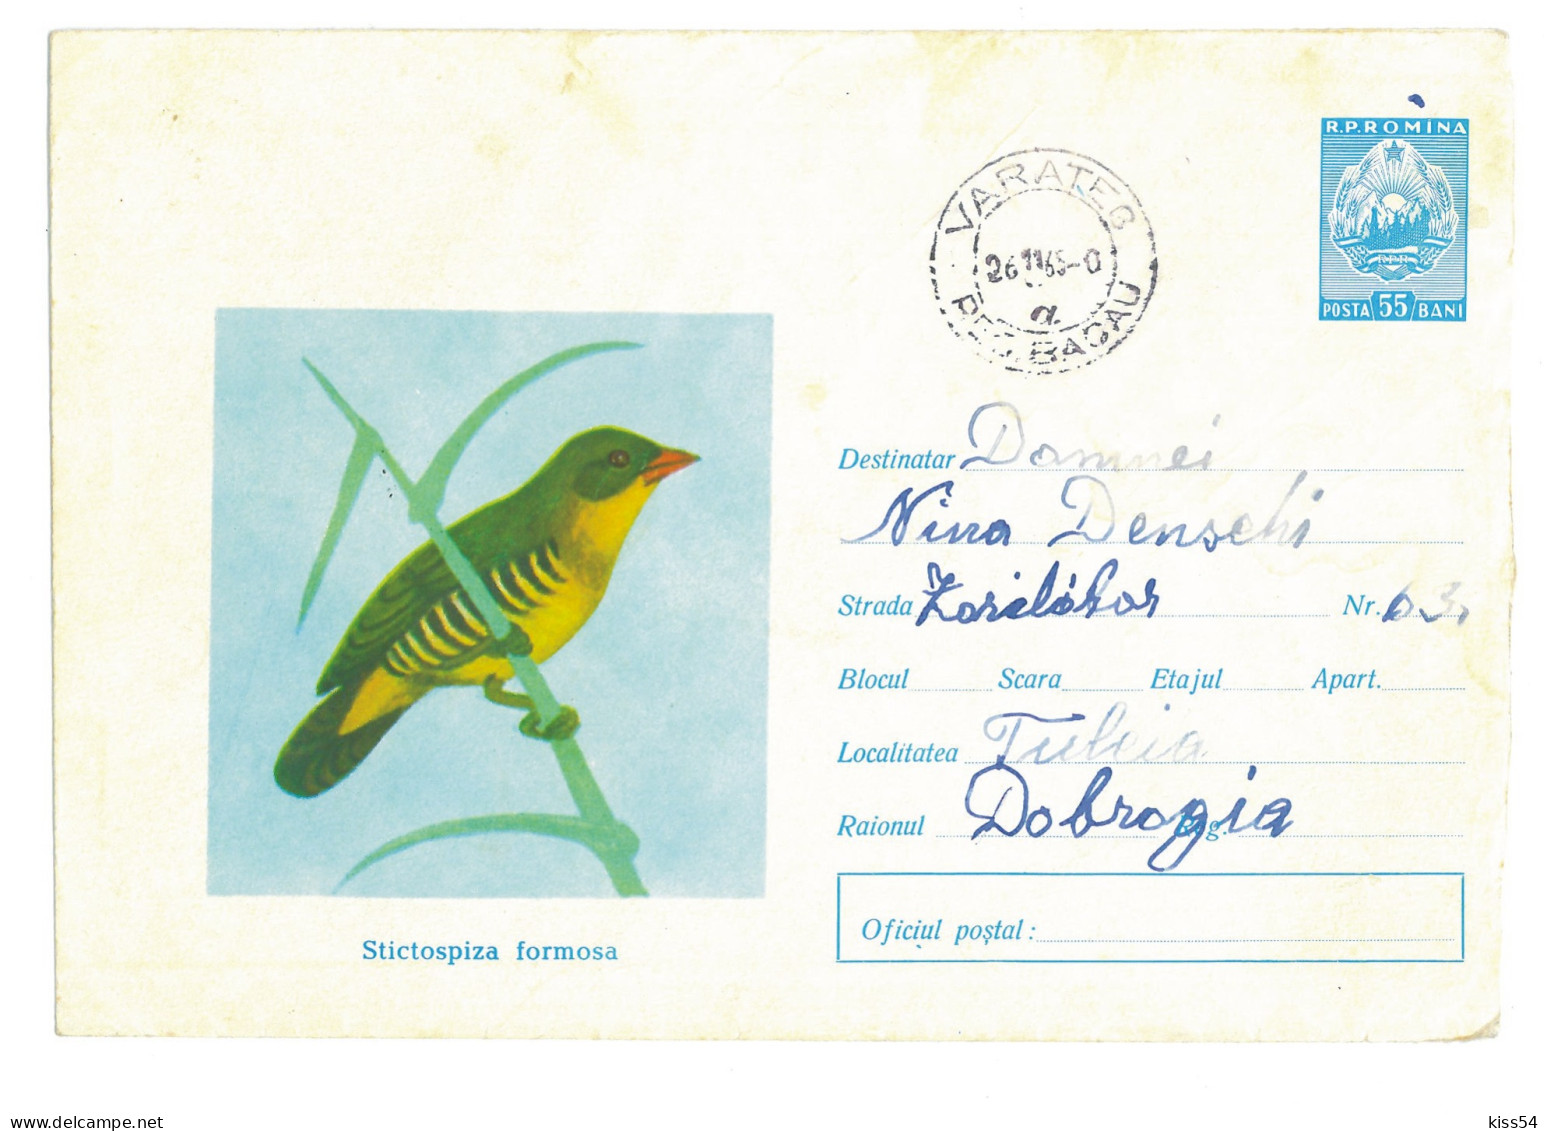 IP 65 A - 0181a BIRD, Romania - Stationery - Used - 1965 - Enteros Postales